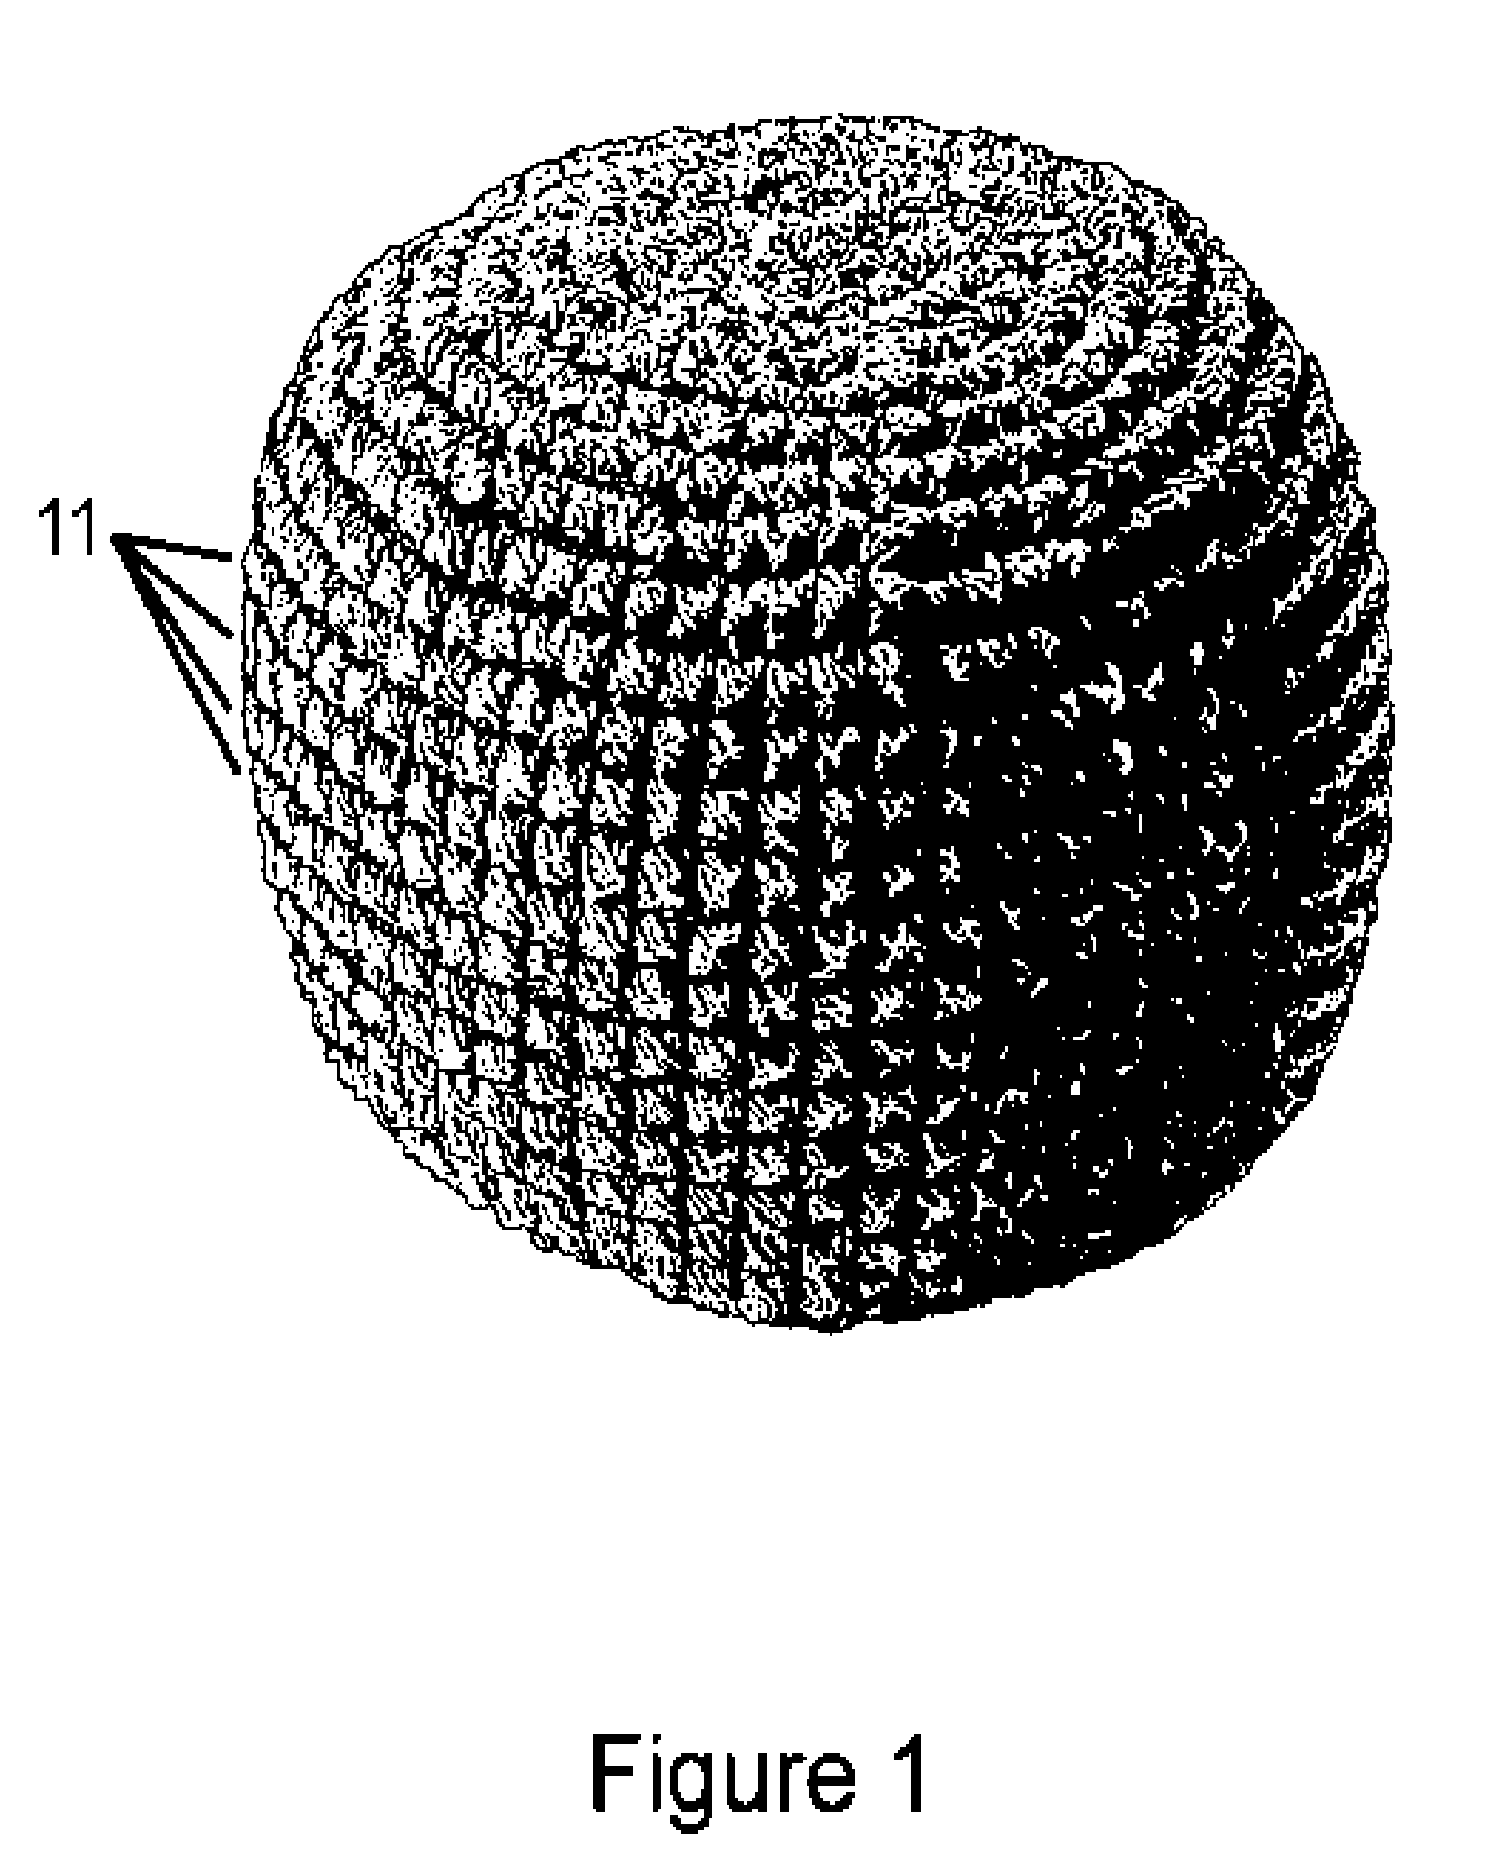 Spherical crocheted object